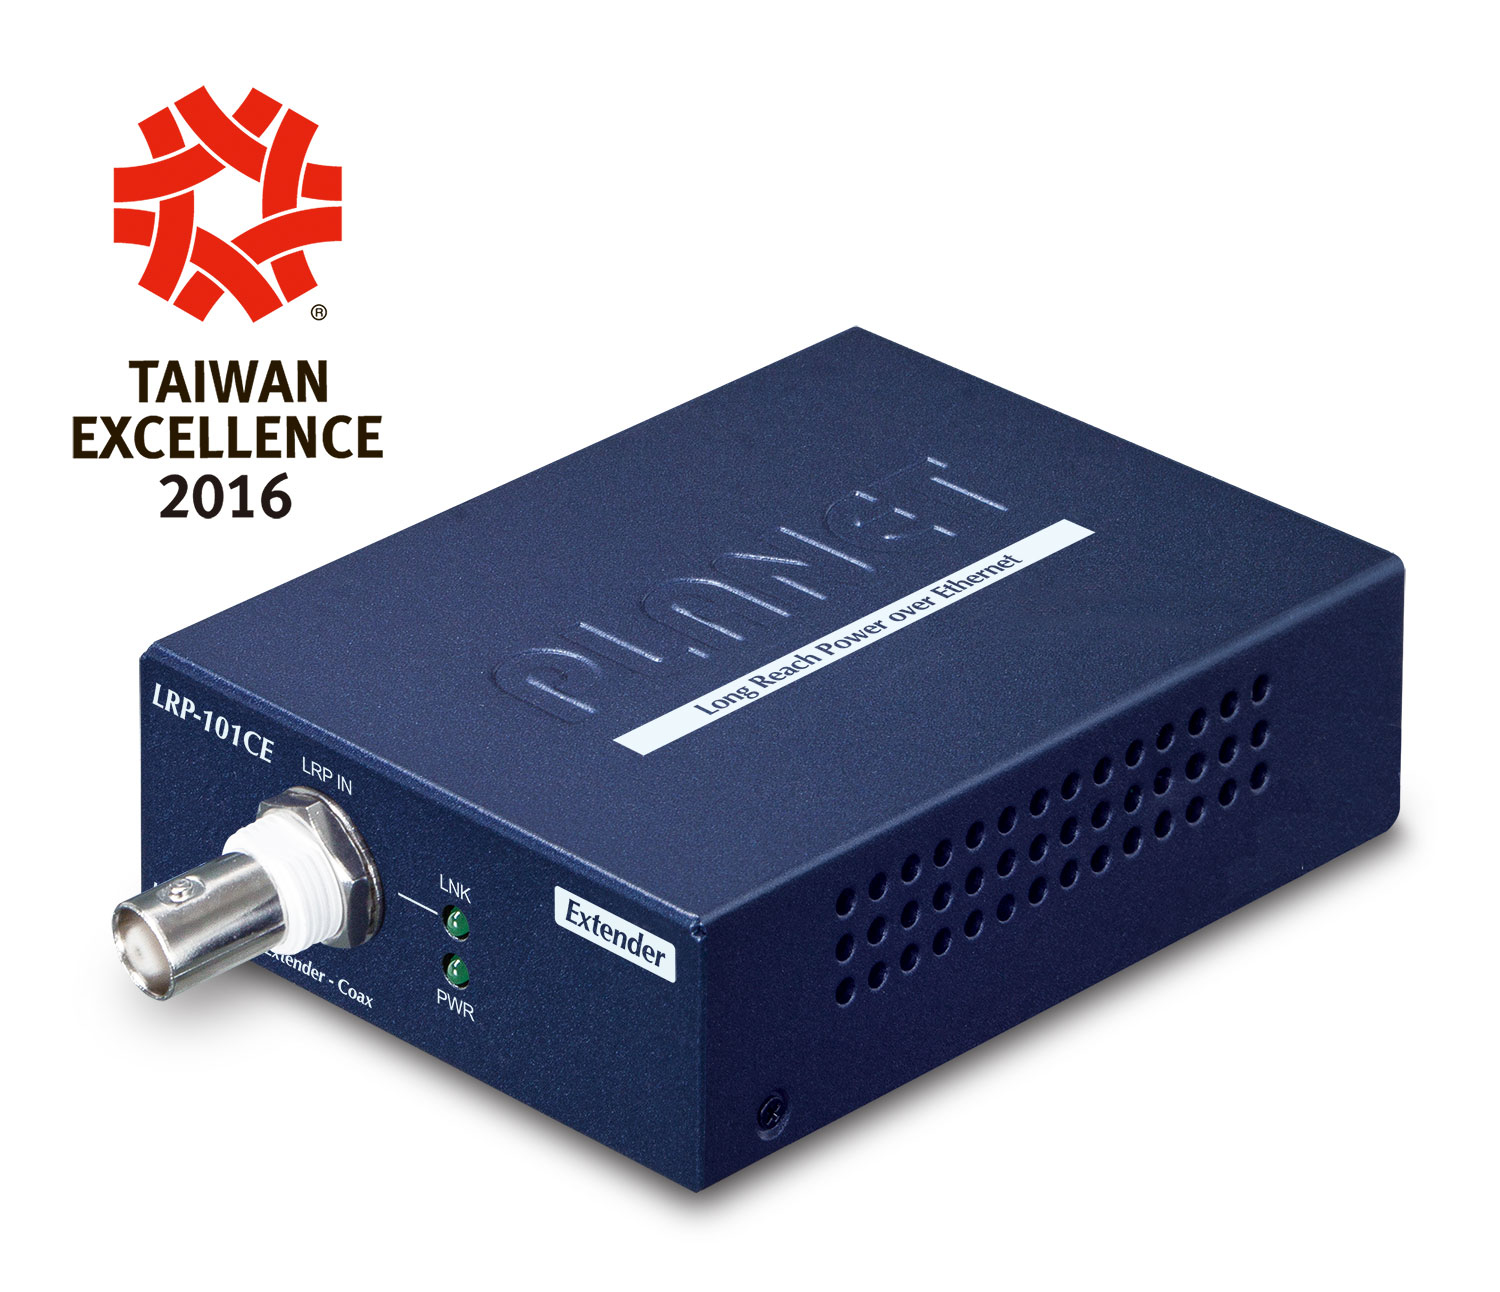 PLANET LRP-101CE network extender Network transmitter Blue 100 Mbit/s